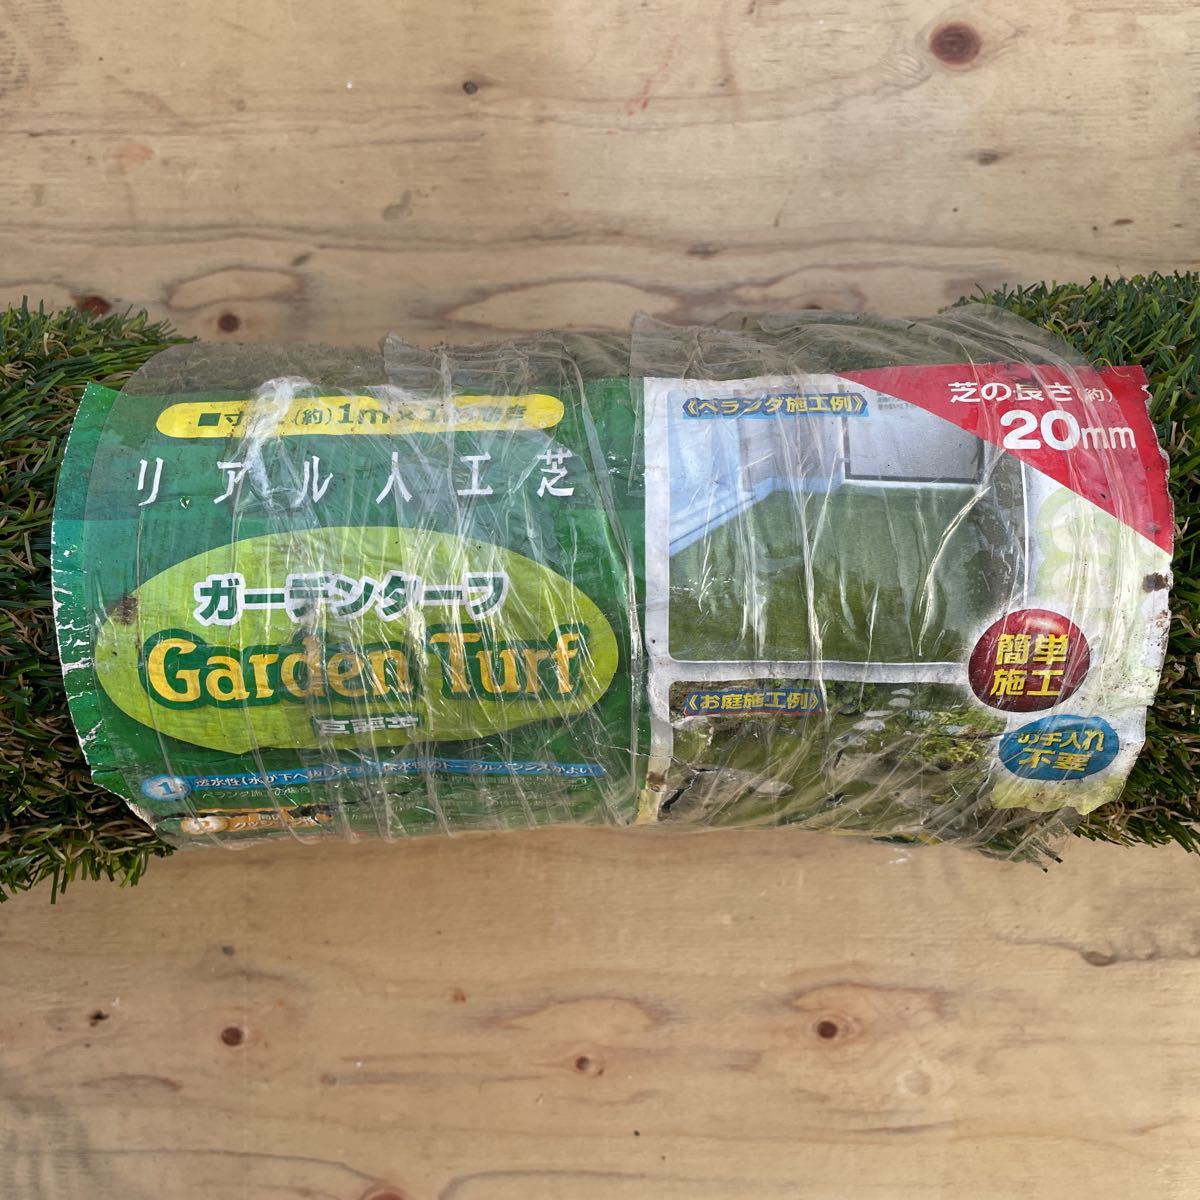  garden tarp artificial lawn 1m×1m lawn grass. length 20mm stock great number 